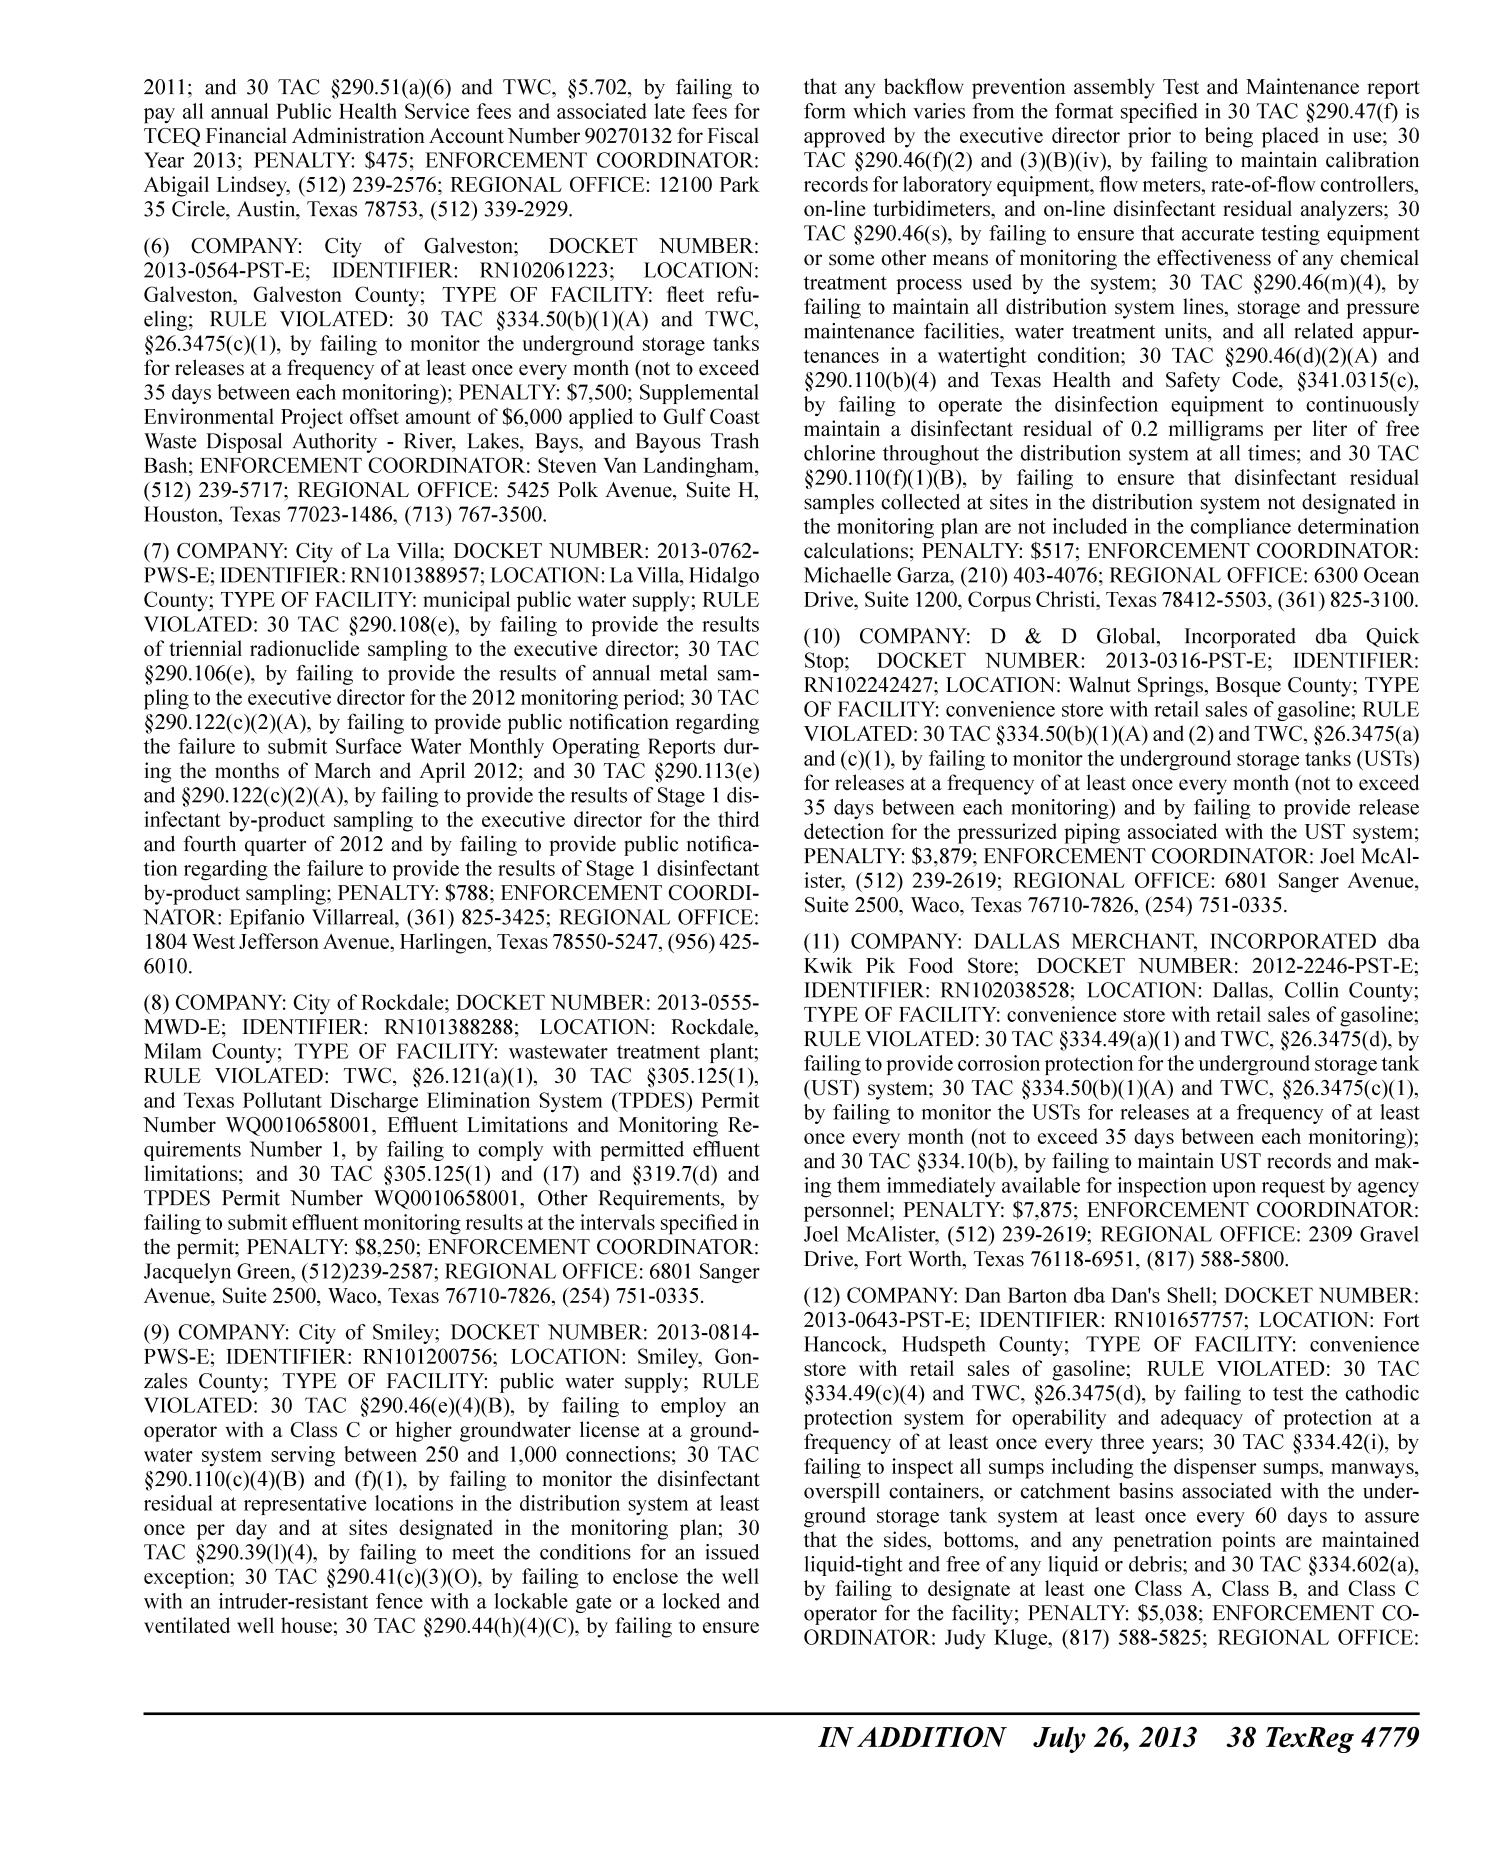 Texas Register, Volume 38, Number 30, Pages 4691-4820, July 26, 2013
                                                
                                                    4779
                                                